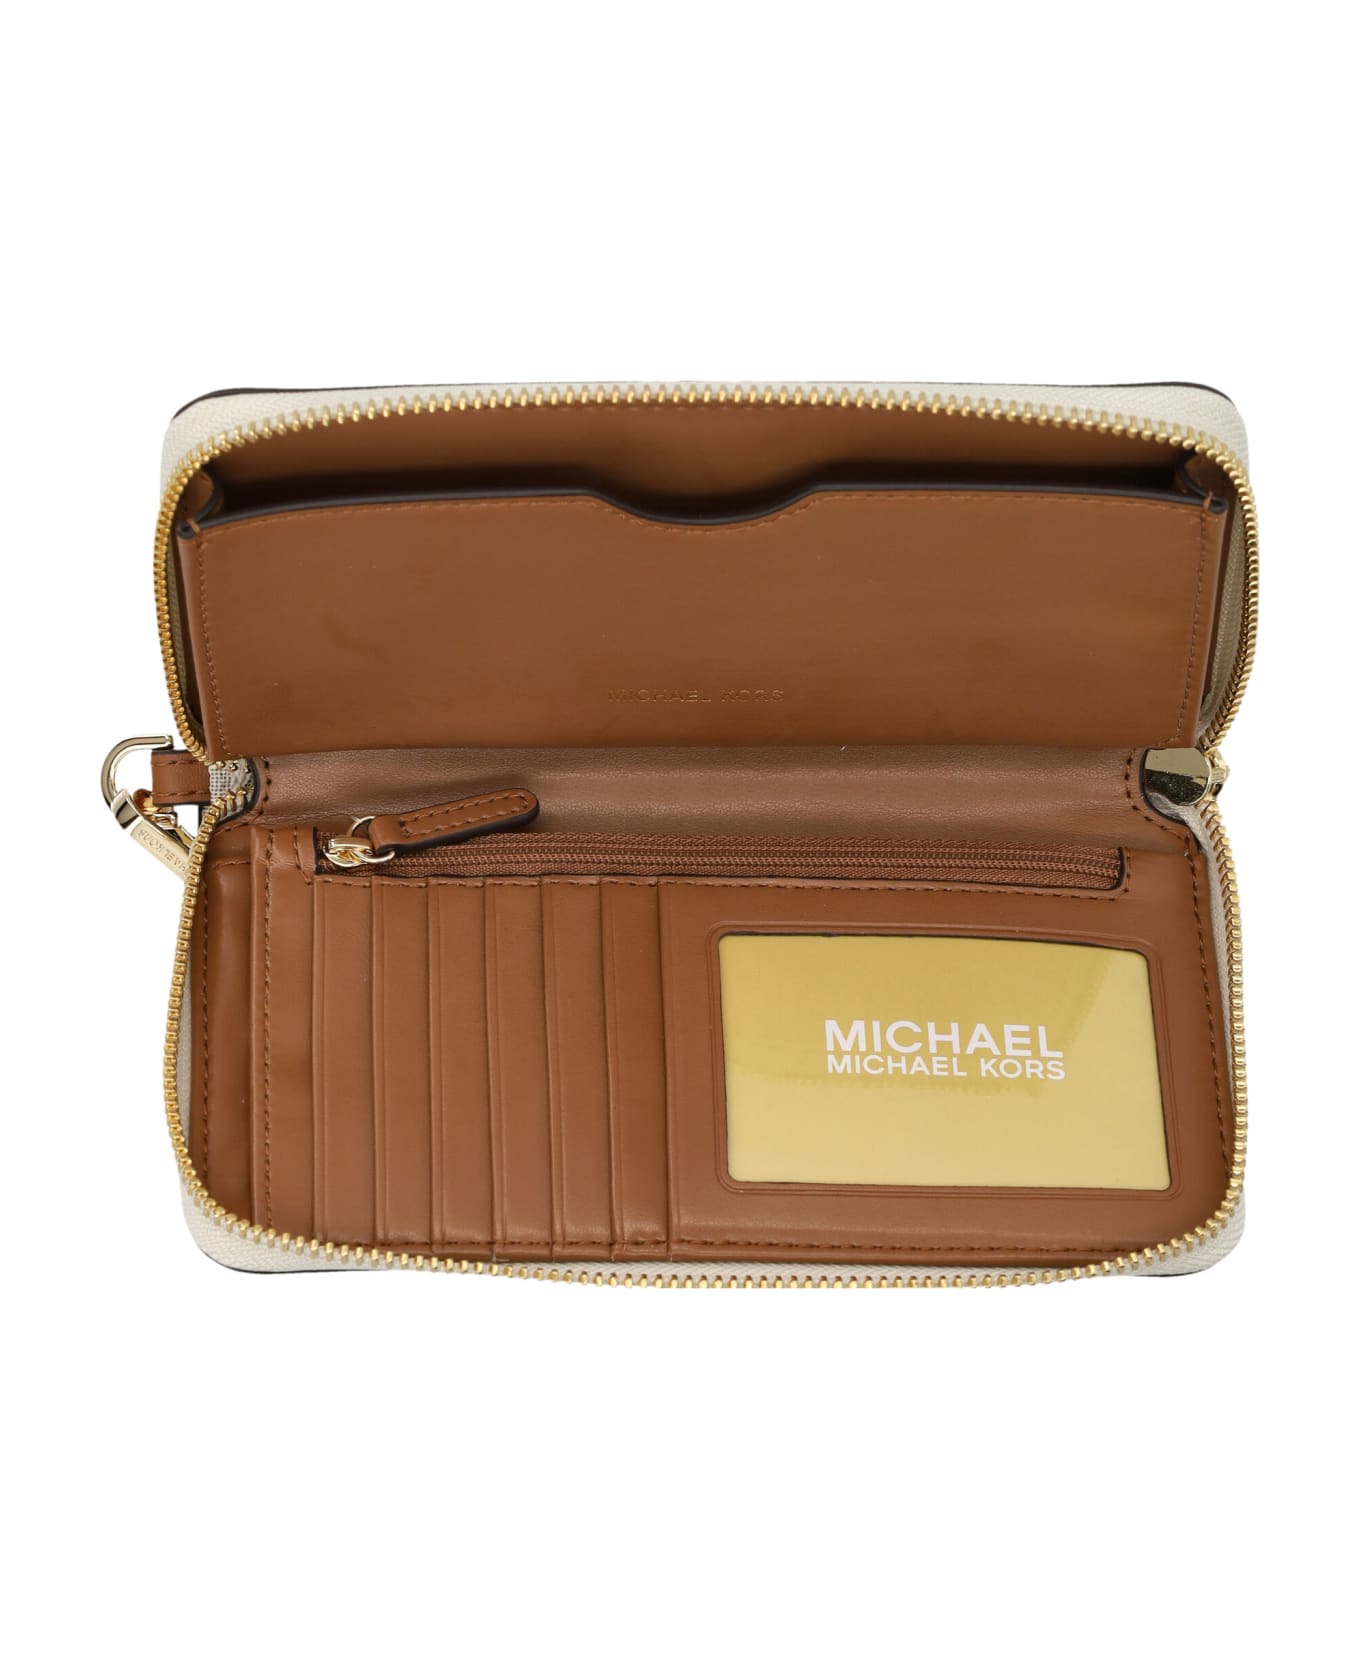 Michael Kors Collection Large Logo Smartphone Wristlet Wallet - Vanilla